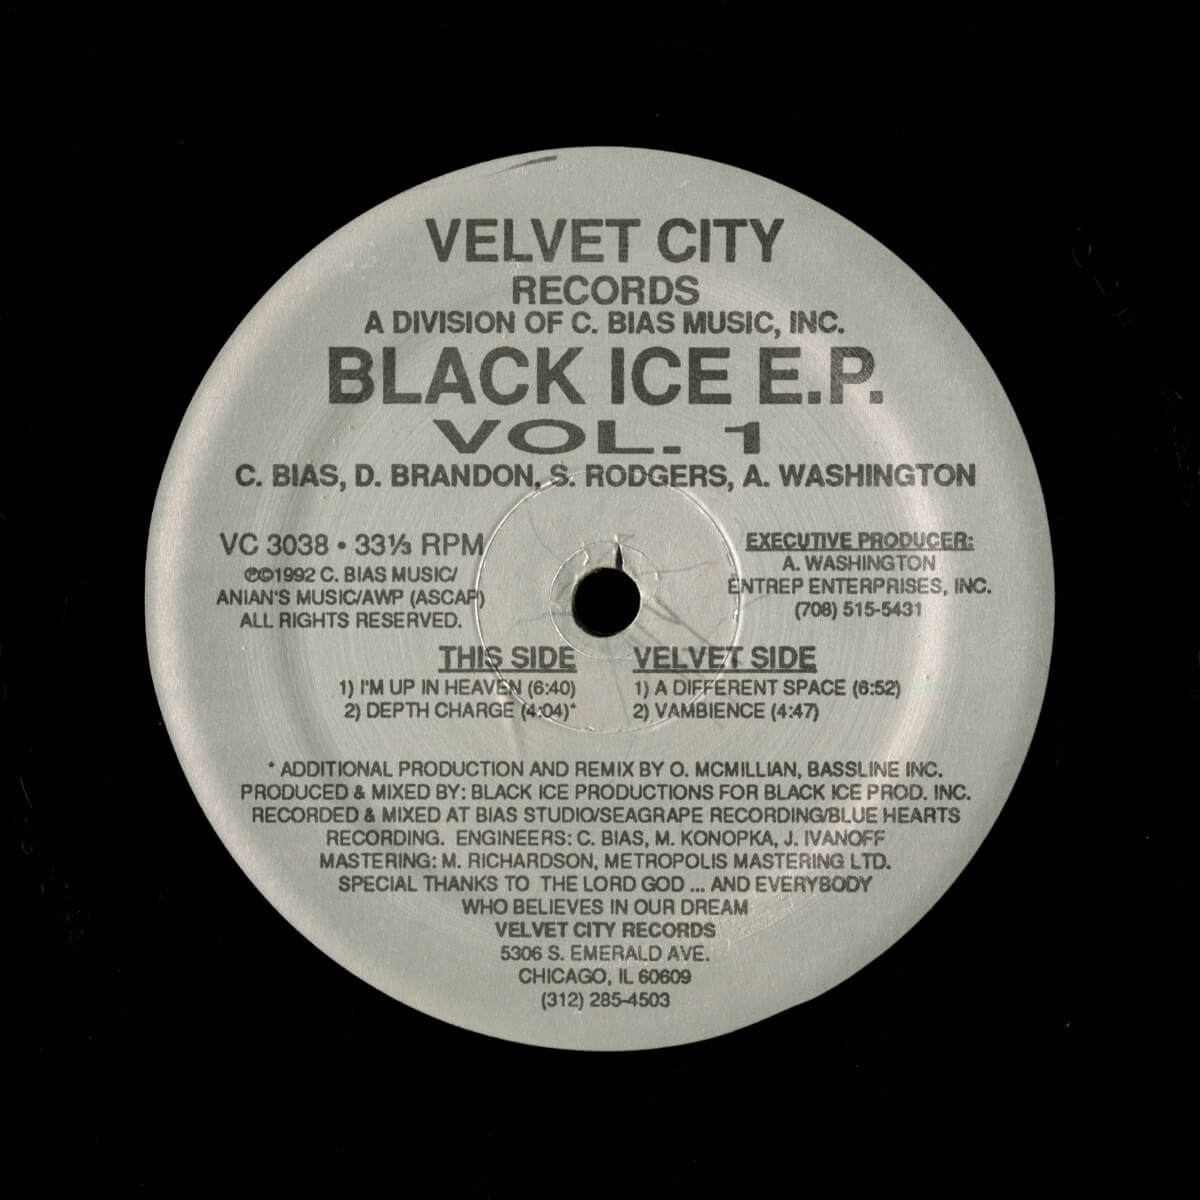 Black Ice – Black Ice E.P. Vol. 1